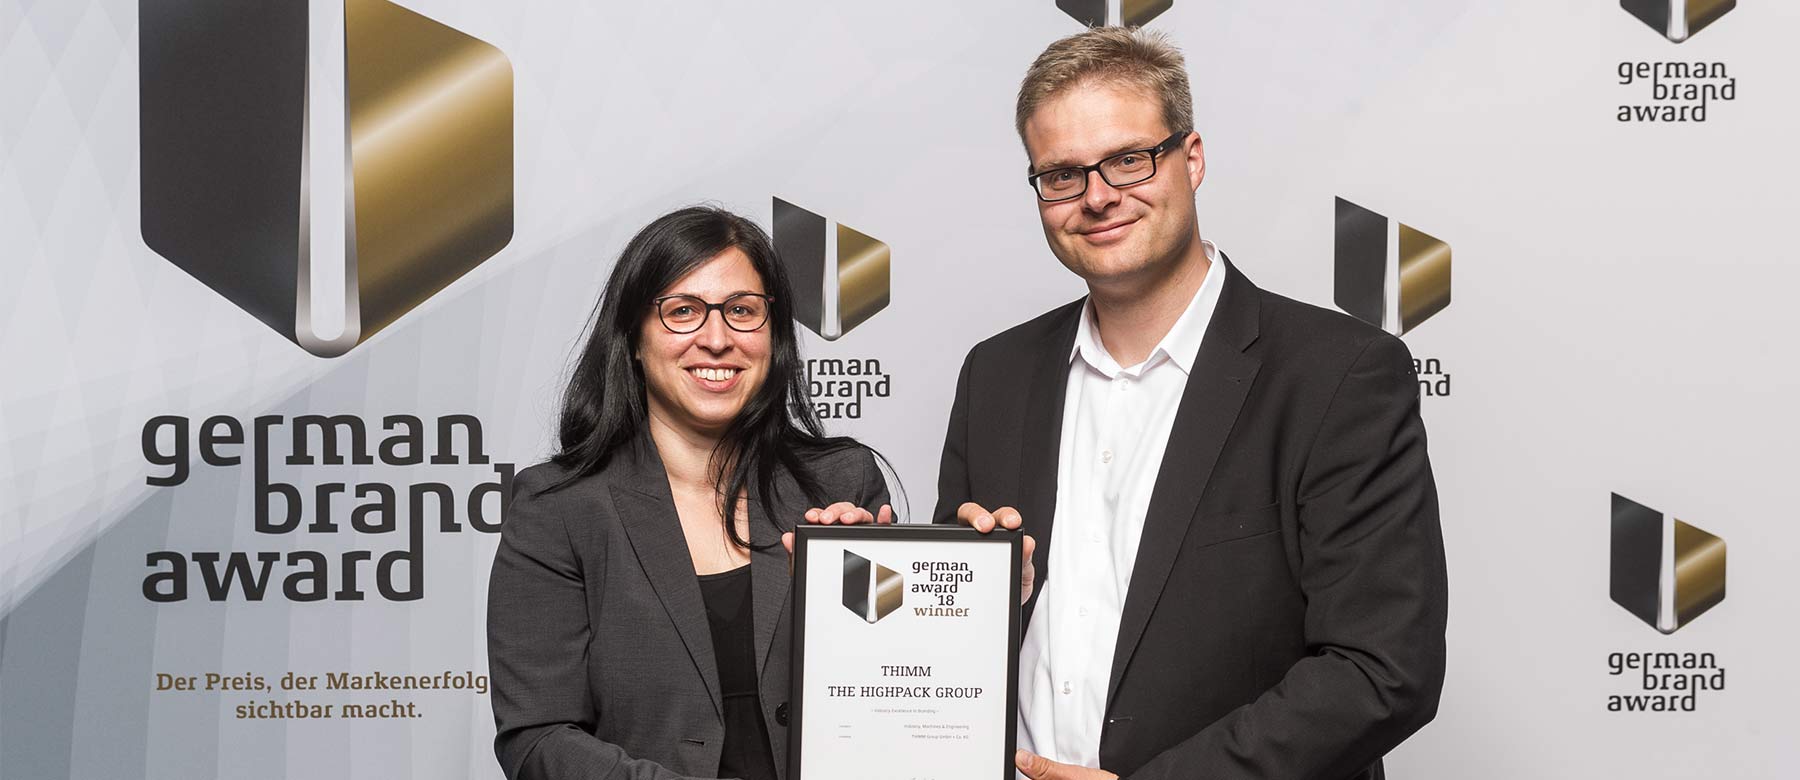 German Brand Award 2018